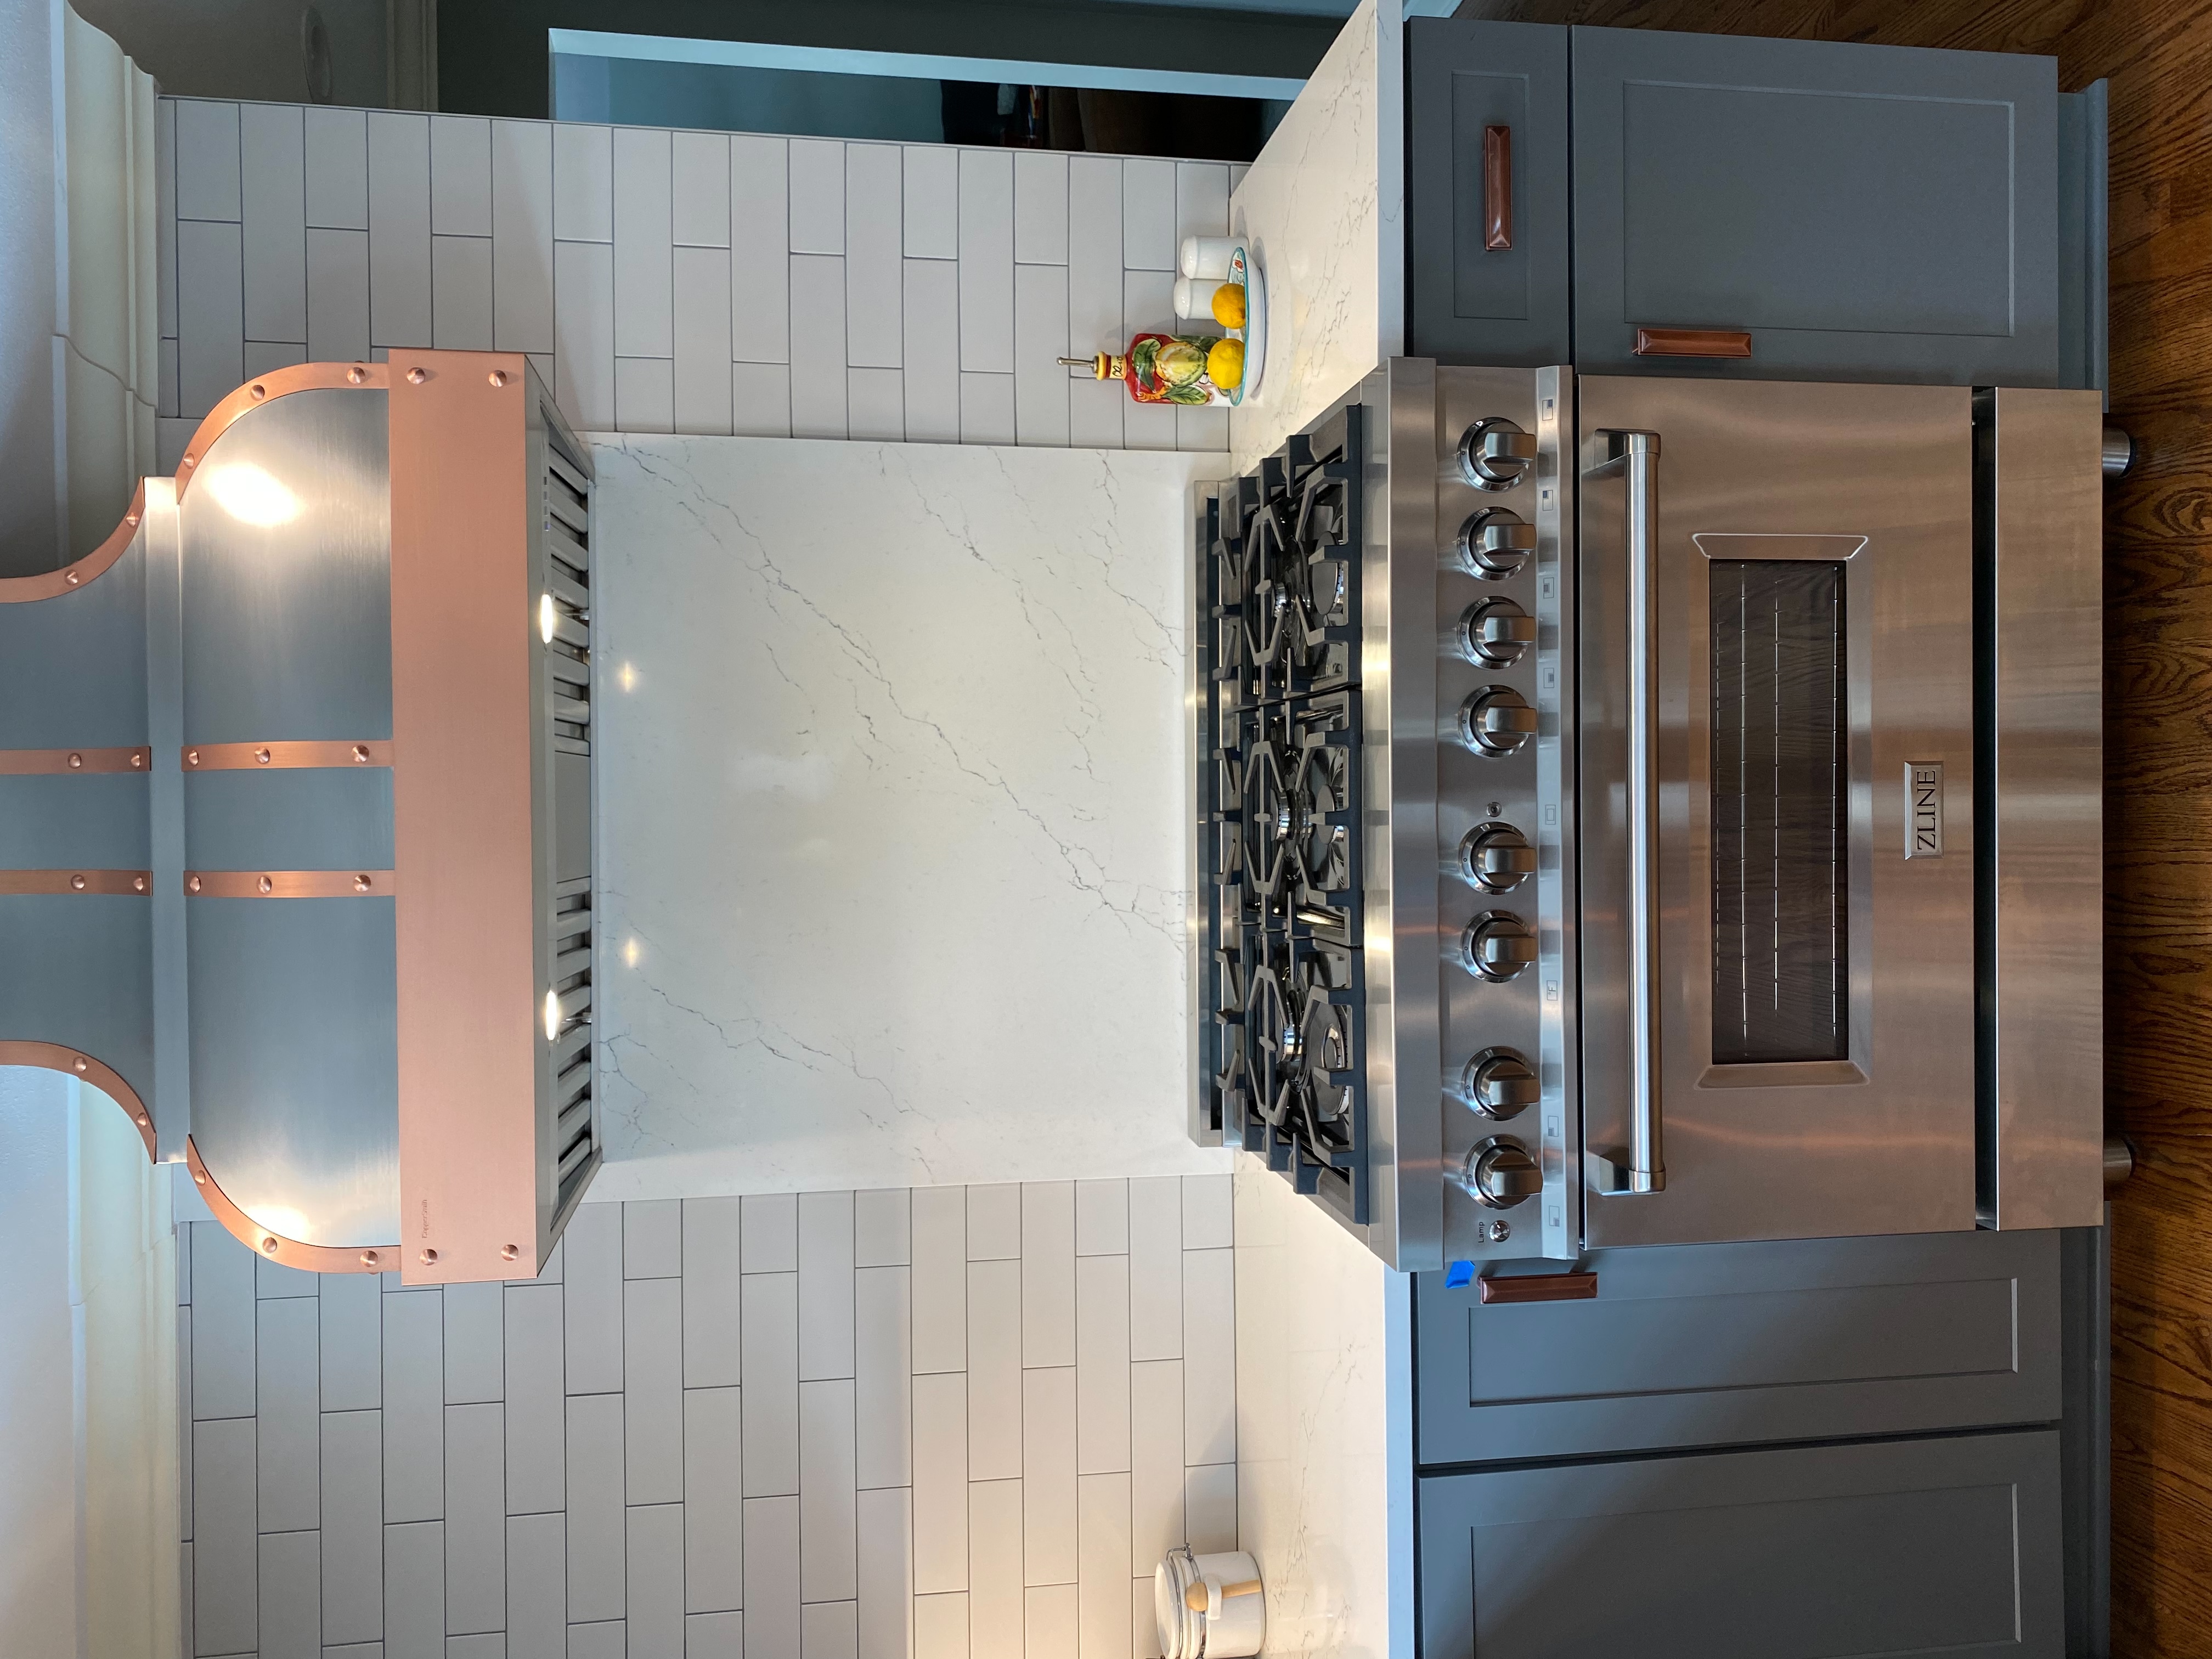 Kitchen design idea, including range hood options, elegant french kitchen designs,black kitchen cabinets, white kitchen countertops, and marble backsplash